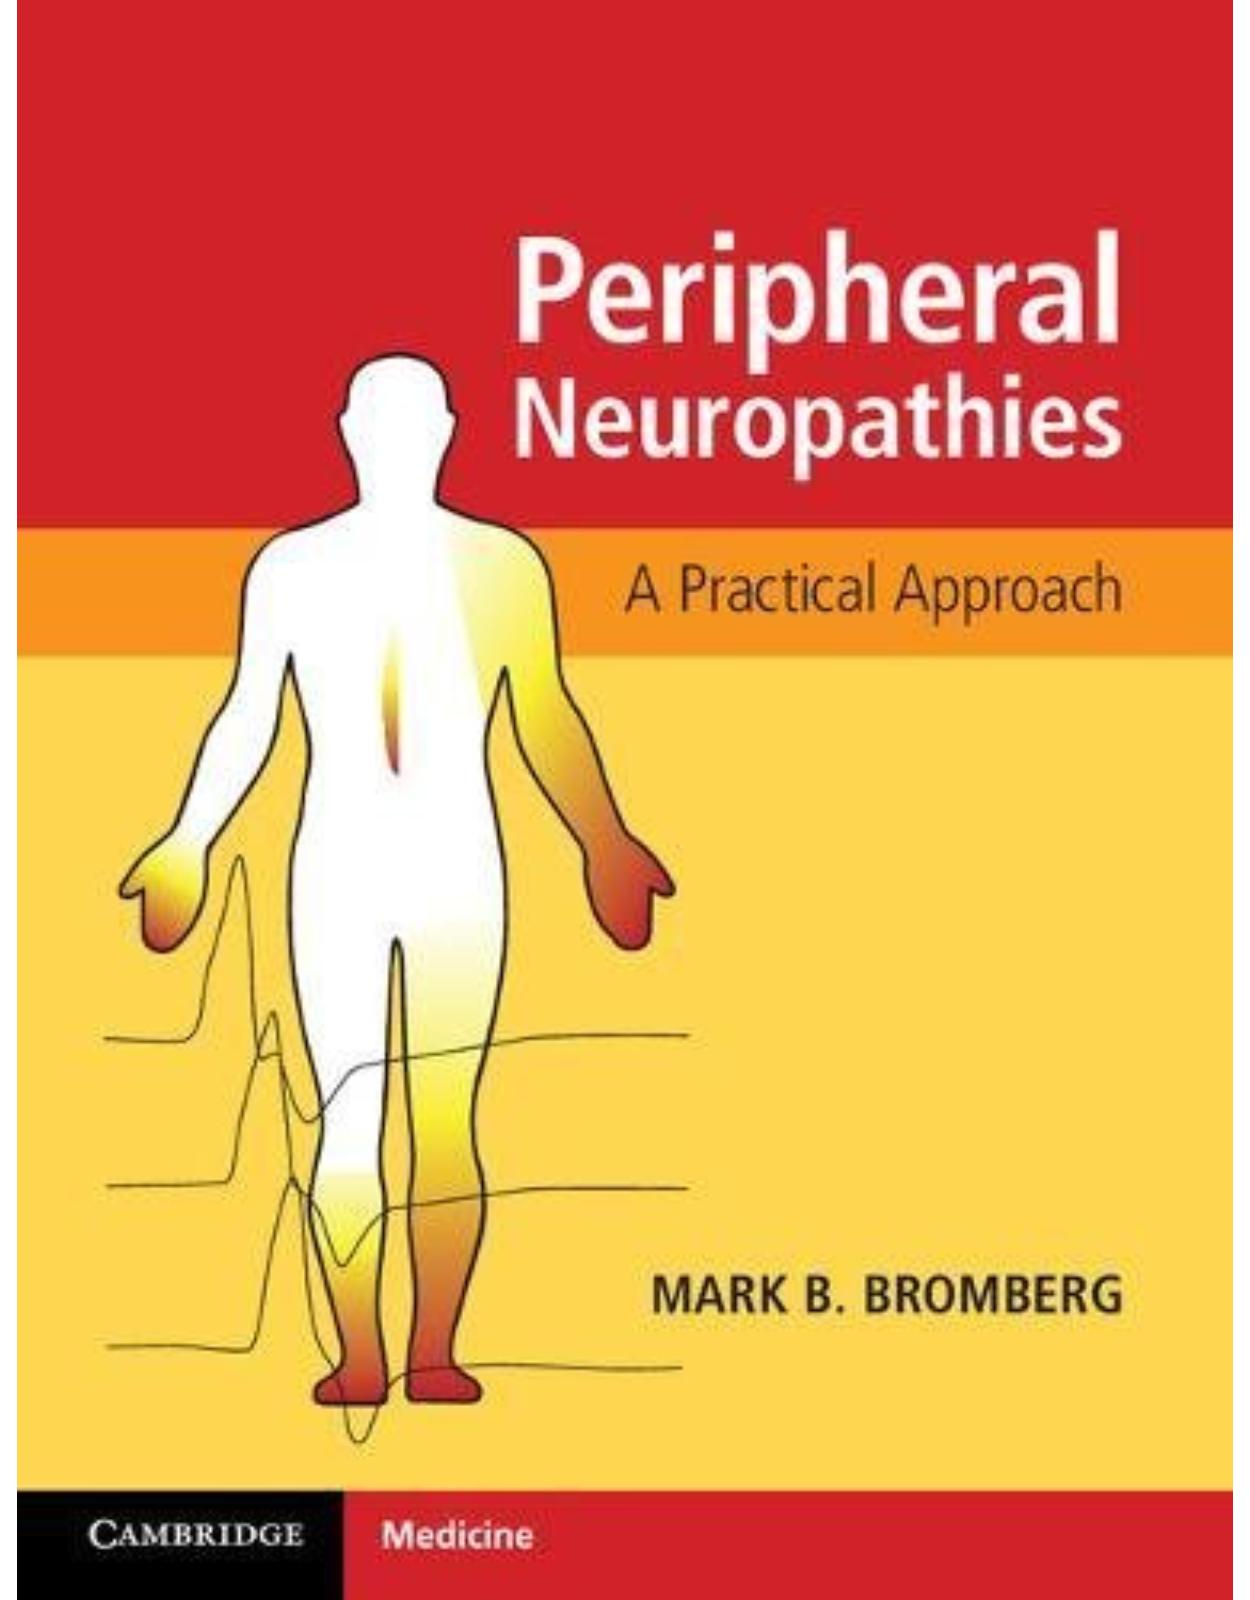 Peripheral Neuropathies: A Practical Approach